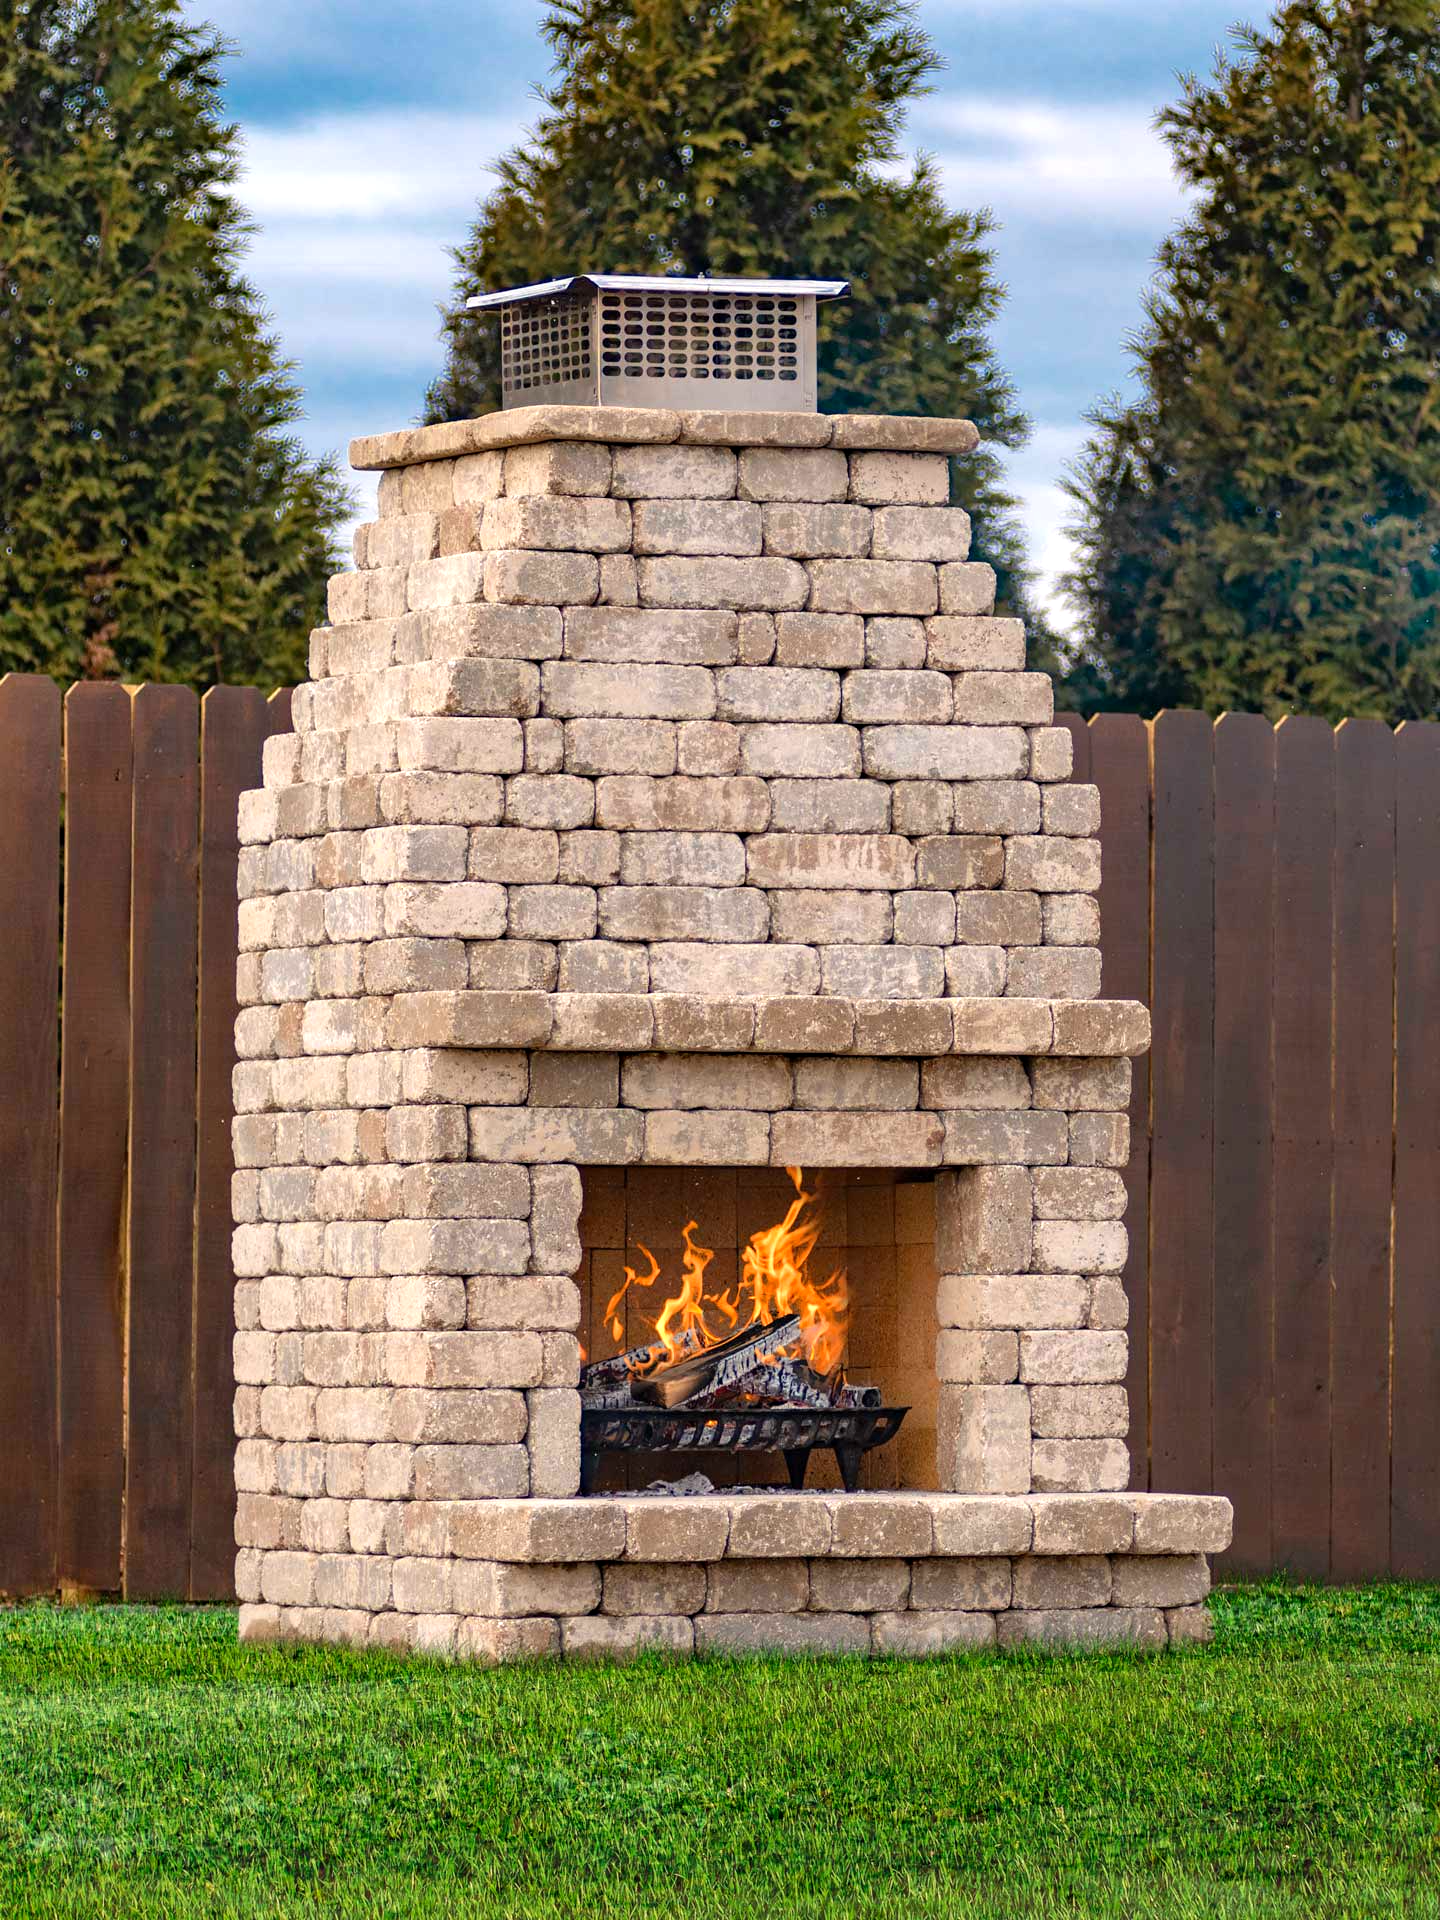 Shop our DIY Standard Fireplace Kit Options